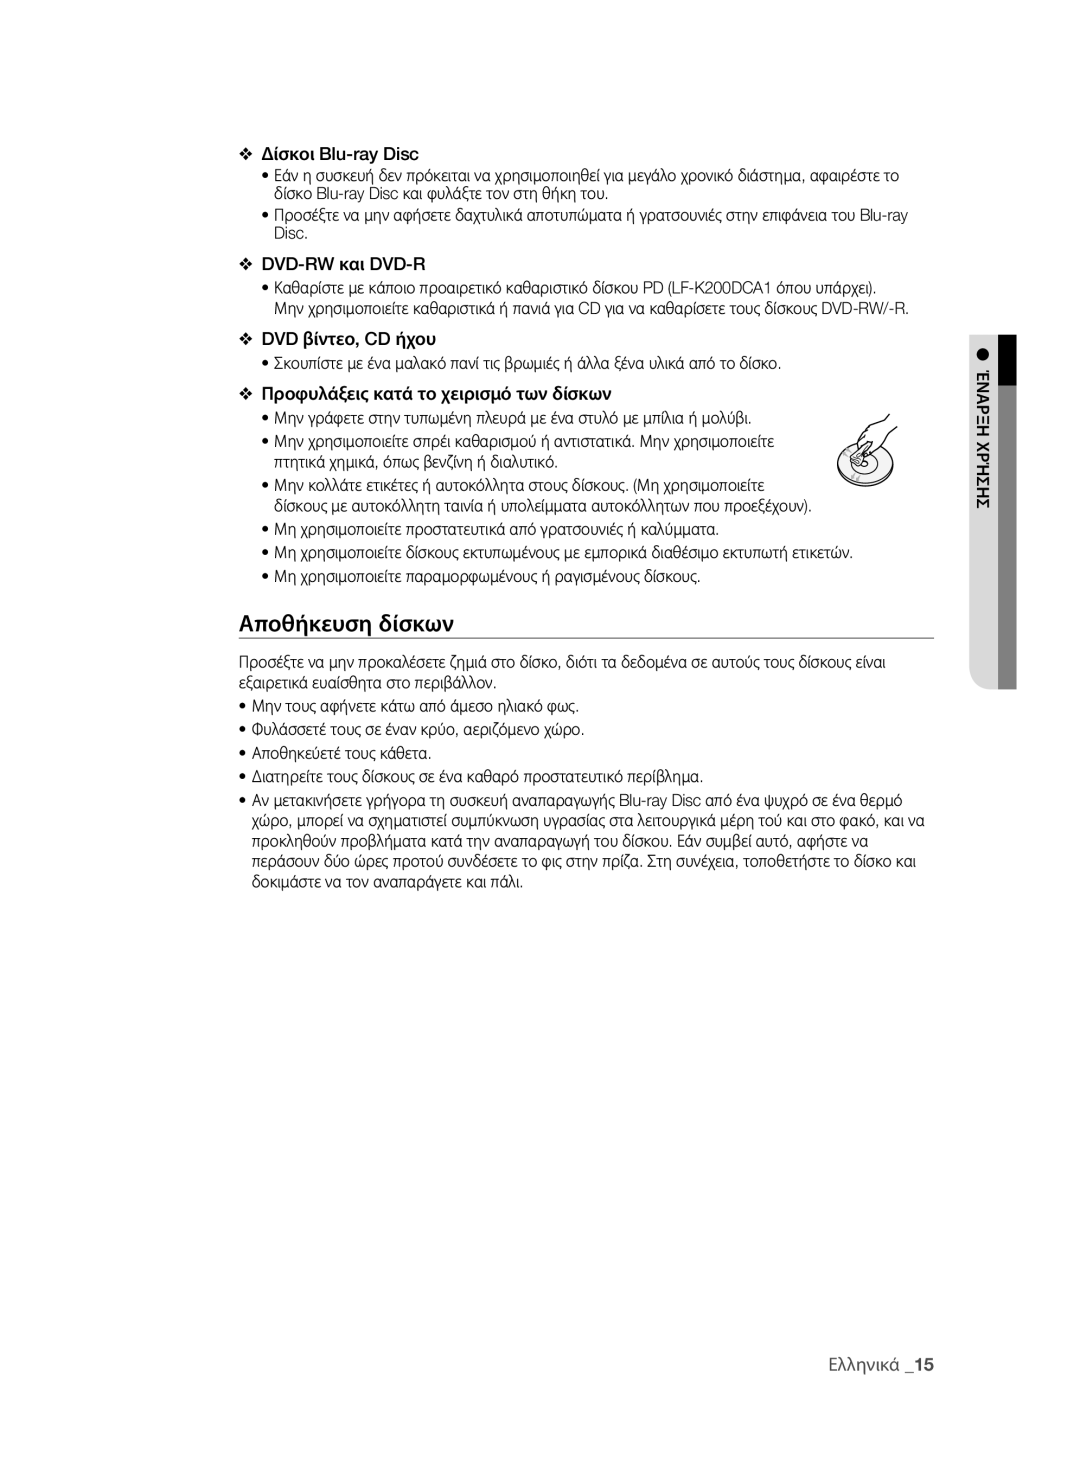 Samsung BD-P1580/EDC manual Αποθήκευση δίσκων, Δίσκοι Blu-ray Disc, DVD-RW και DVD-R, DVD βίντεο, CD ήχου, Ελληνικά 